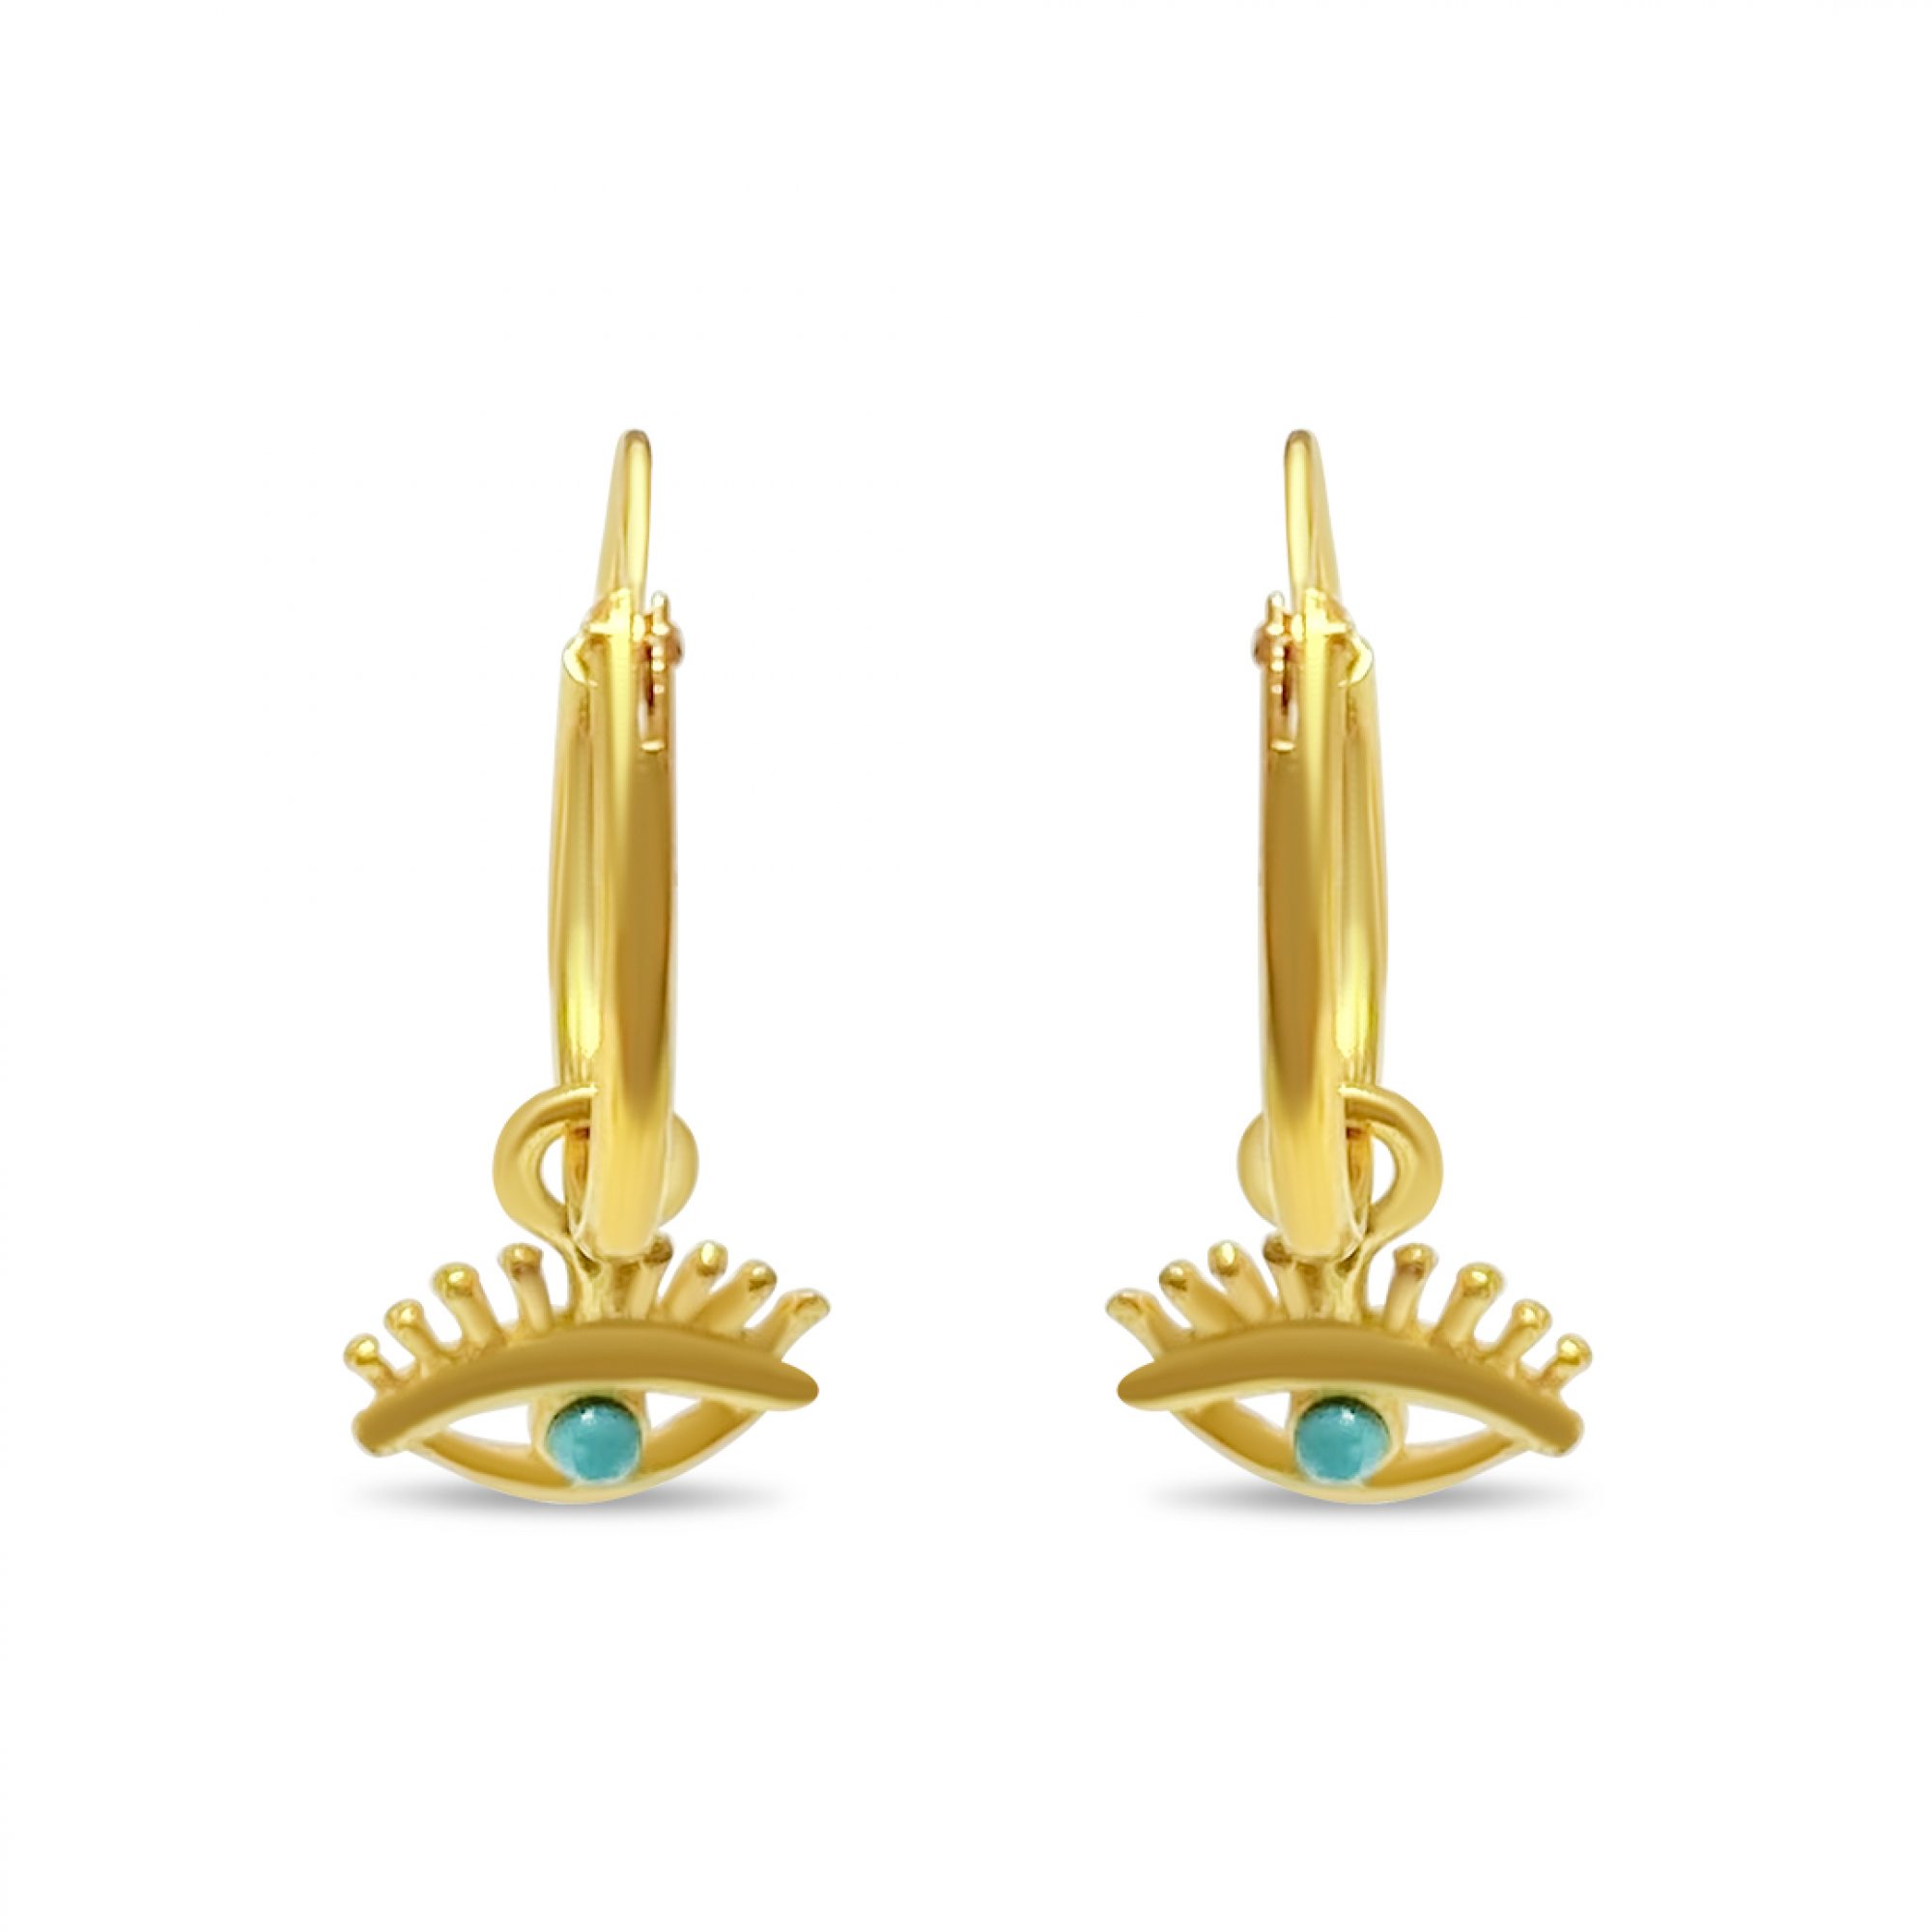 Gold plated earrings with dangle eye